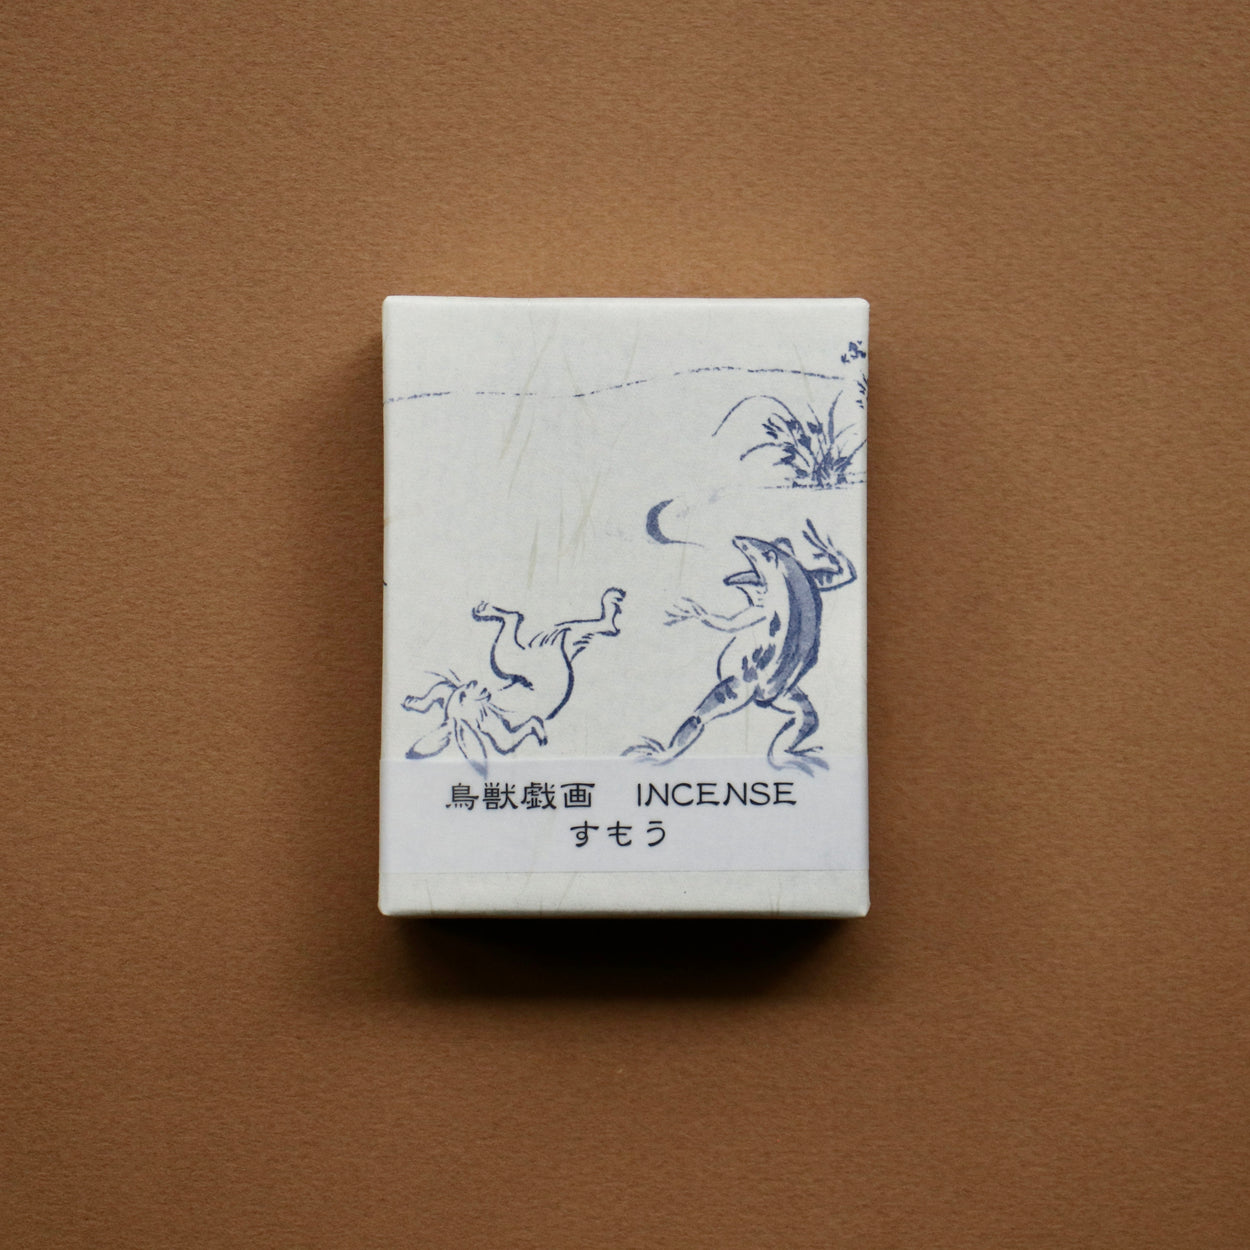 Japanese Incense Sticks box- Sumo on brown backdrop.